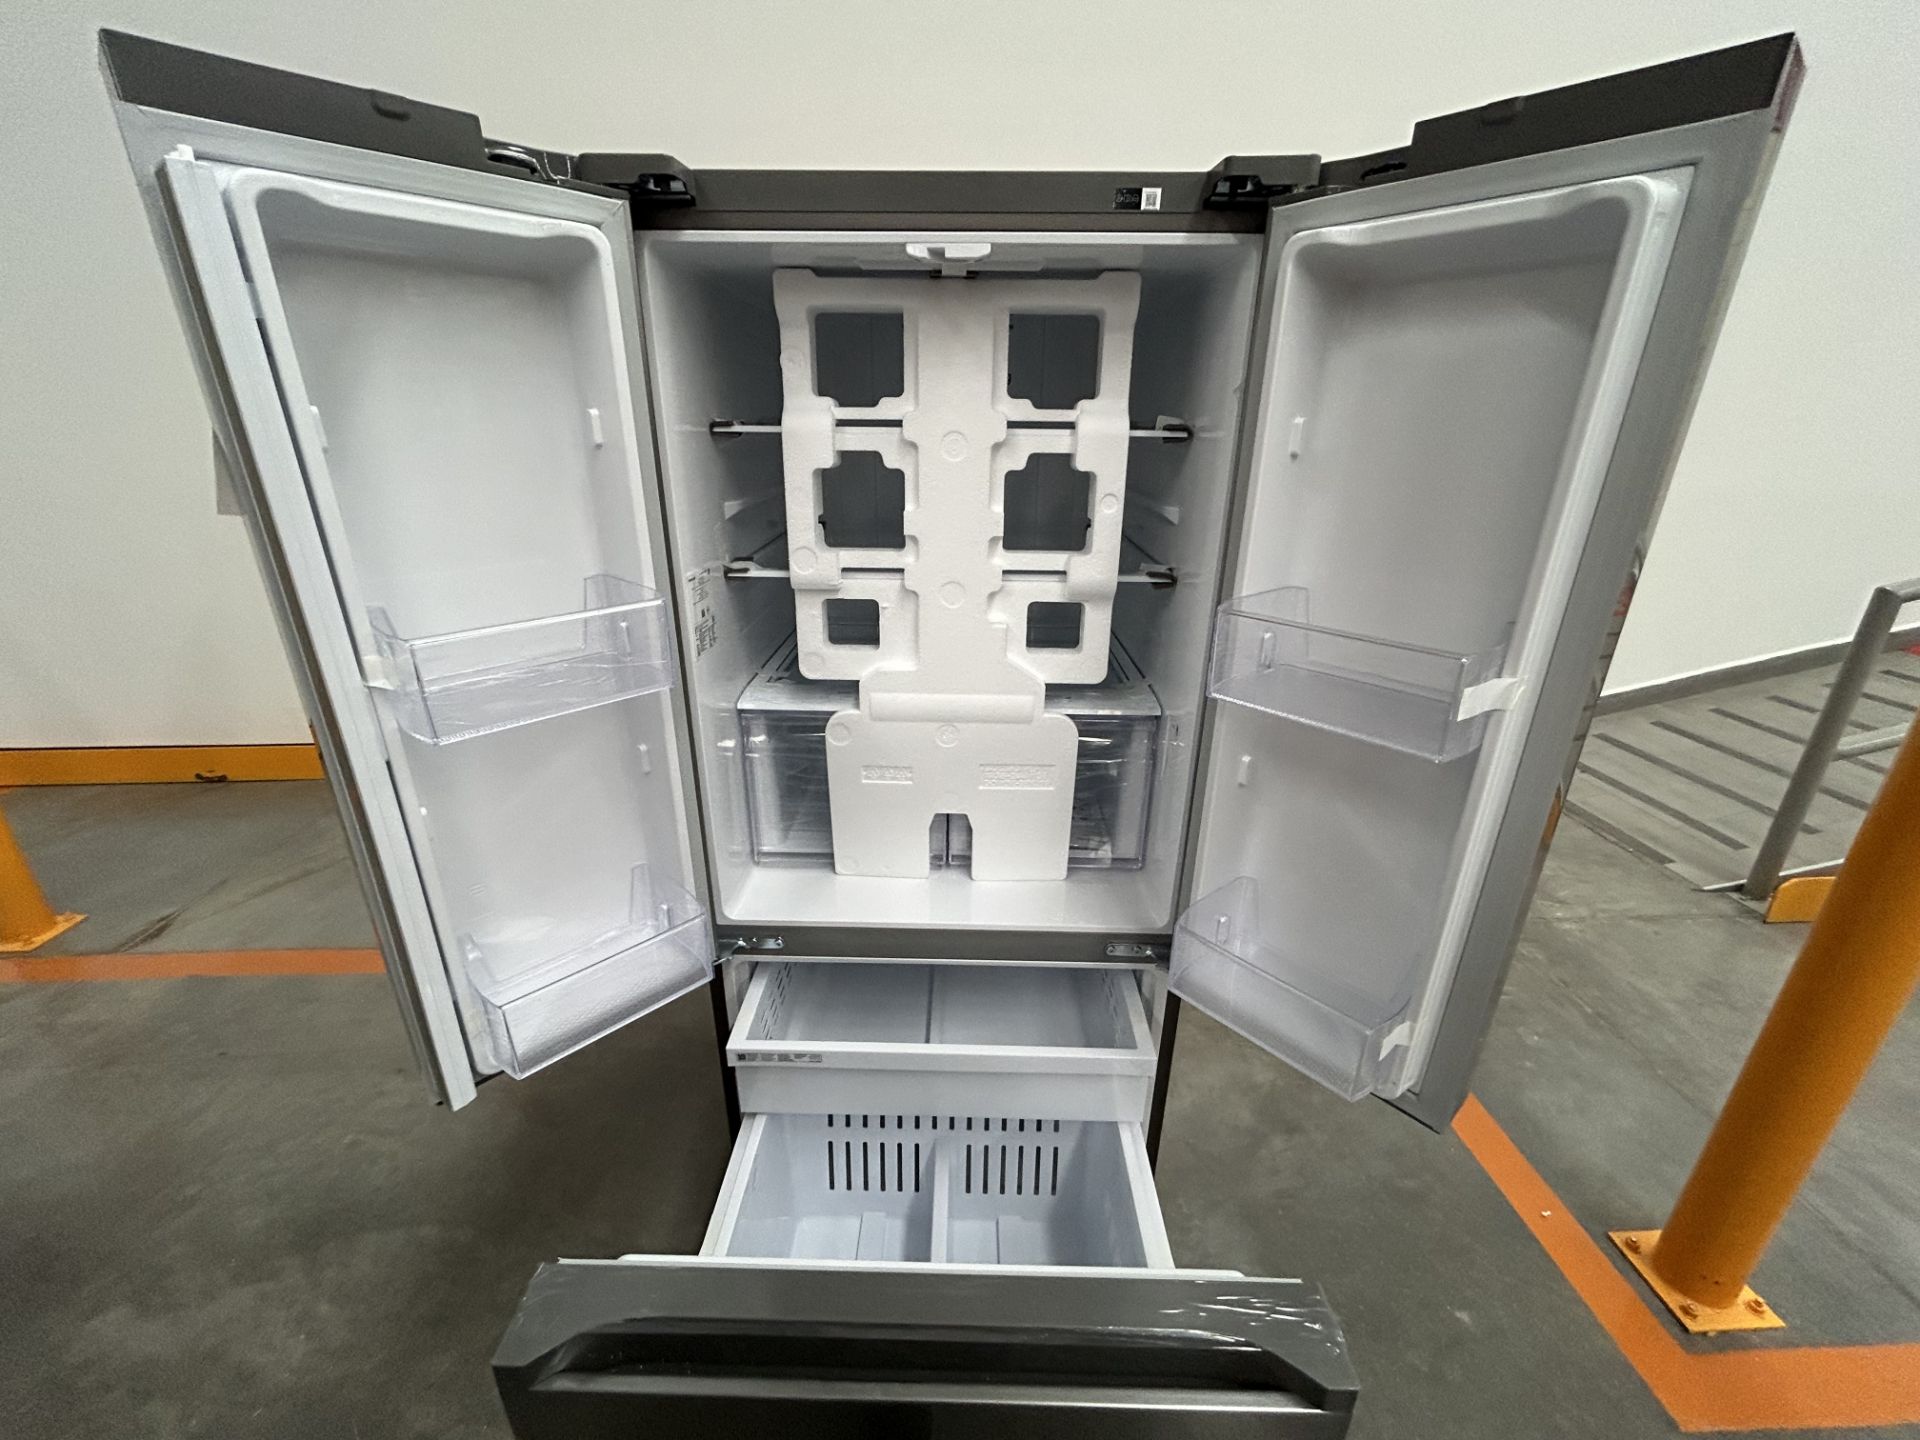 (NUEVO) Refrigerador Marca SAMSUNG, Modelo RF22A410S9, Serie 01694K, Color GRIS - Image 4 of 4